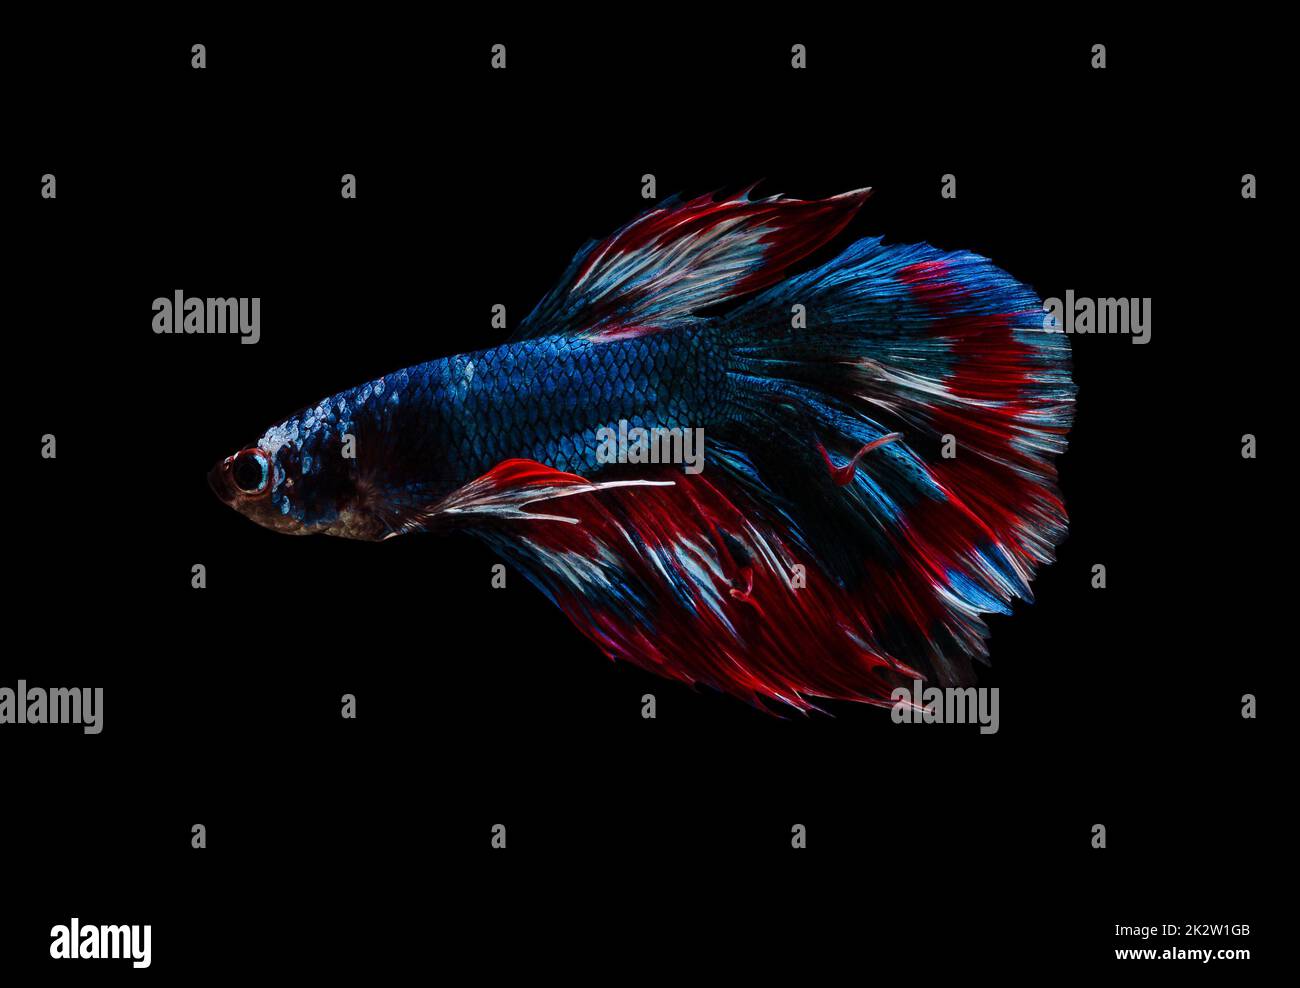 Blue and red half moon Betta splendens fish (Siamese fighting fish) on black background. Stock Photo